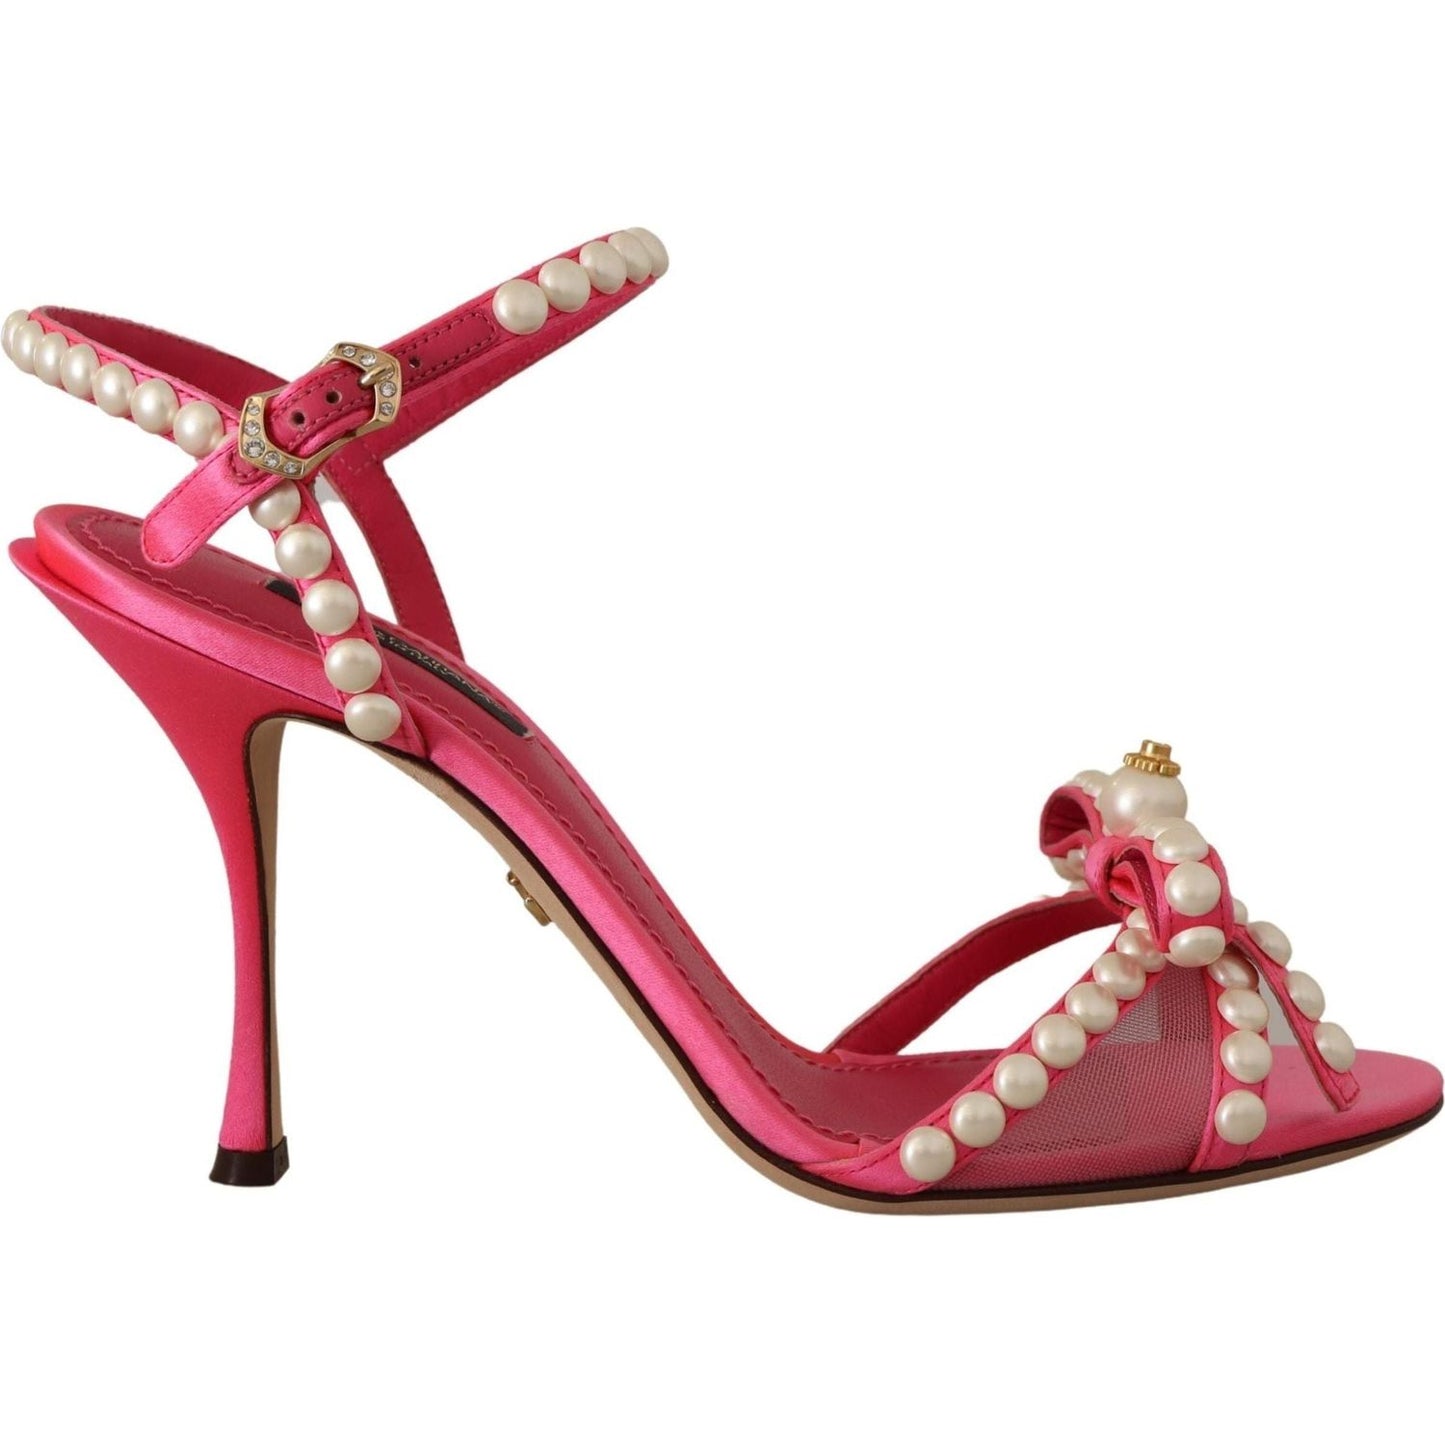 Dolce & Gabbana Elegant Pink Pearl Embellished Heels Sandals pink-satin-white-pearl-crystals-heels-shoes IMG_0411-scaled-1fbd3bf7-f92.jpg